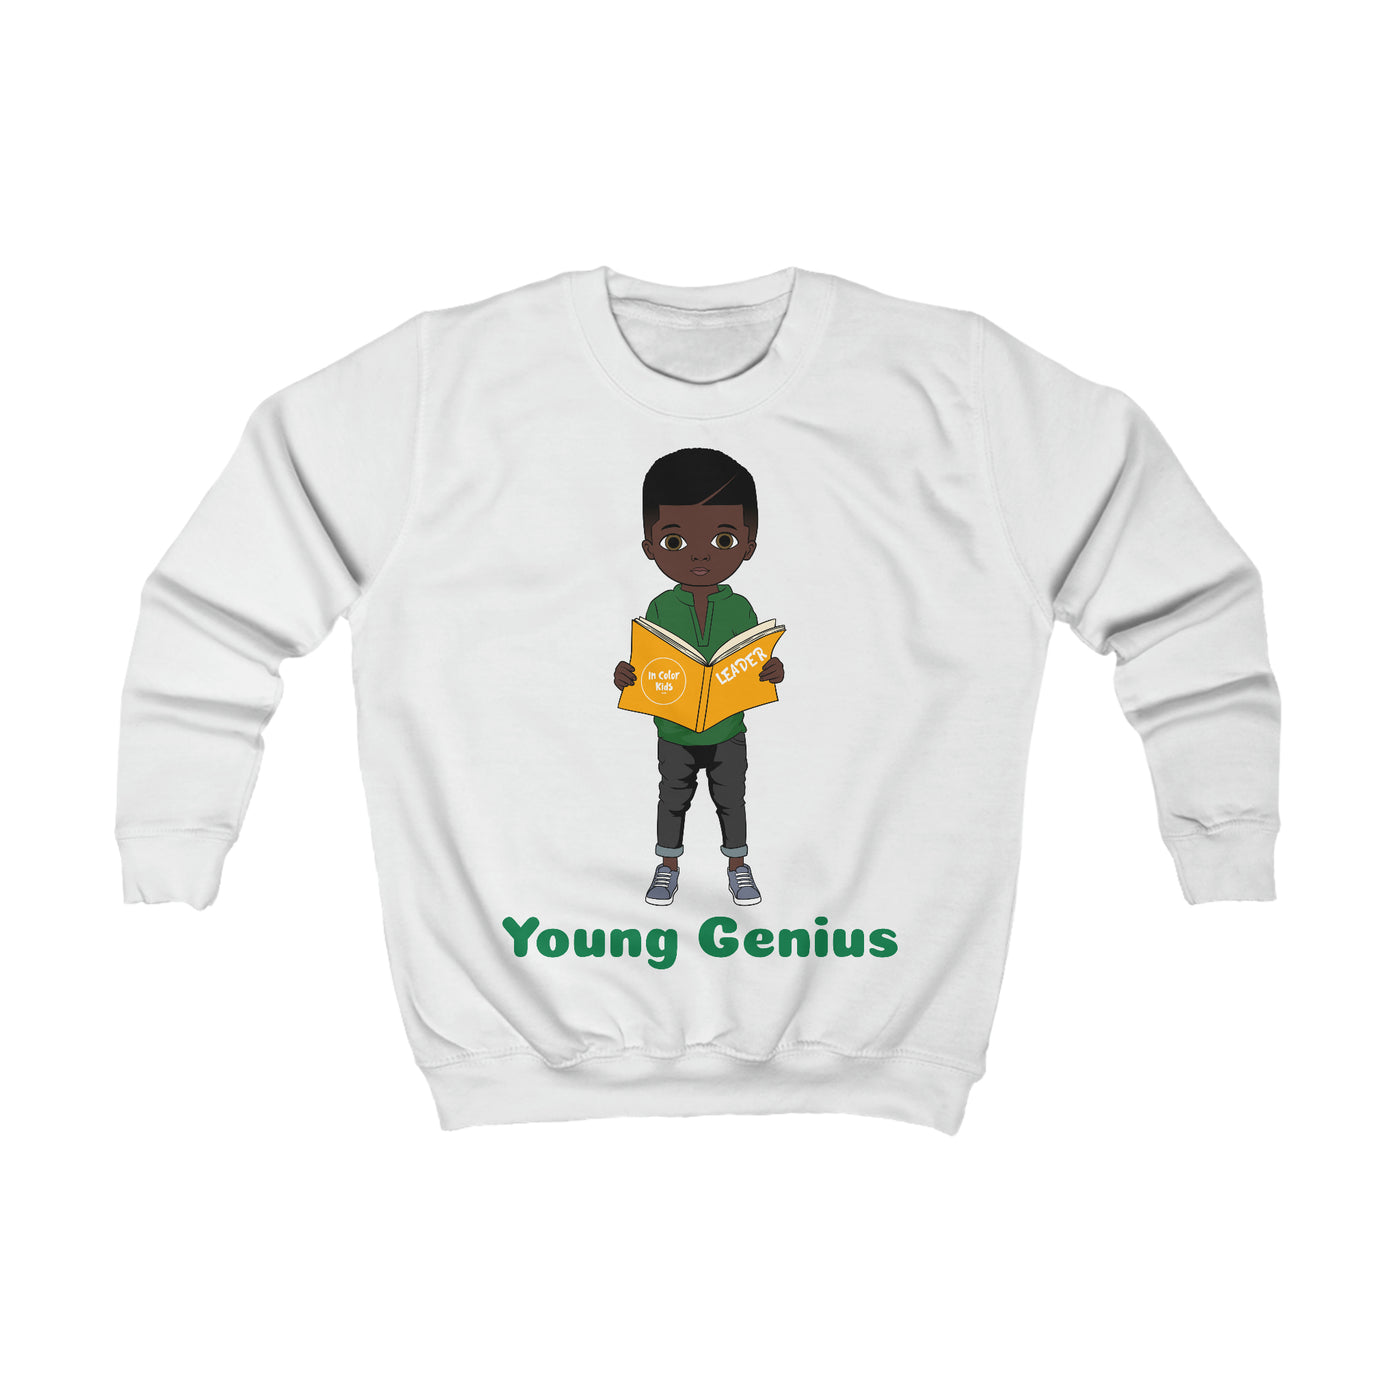 Young Genius Sweatshirt - Dark Chocolate